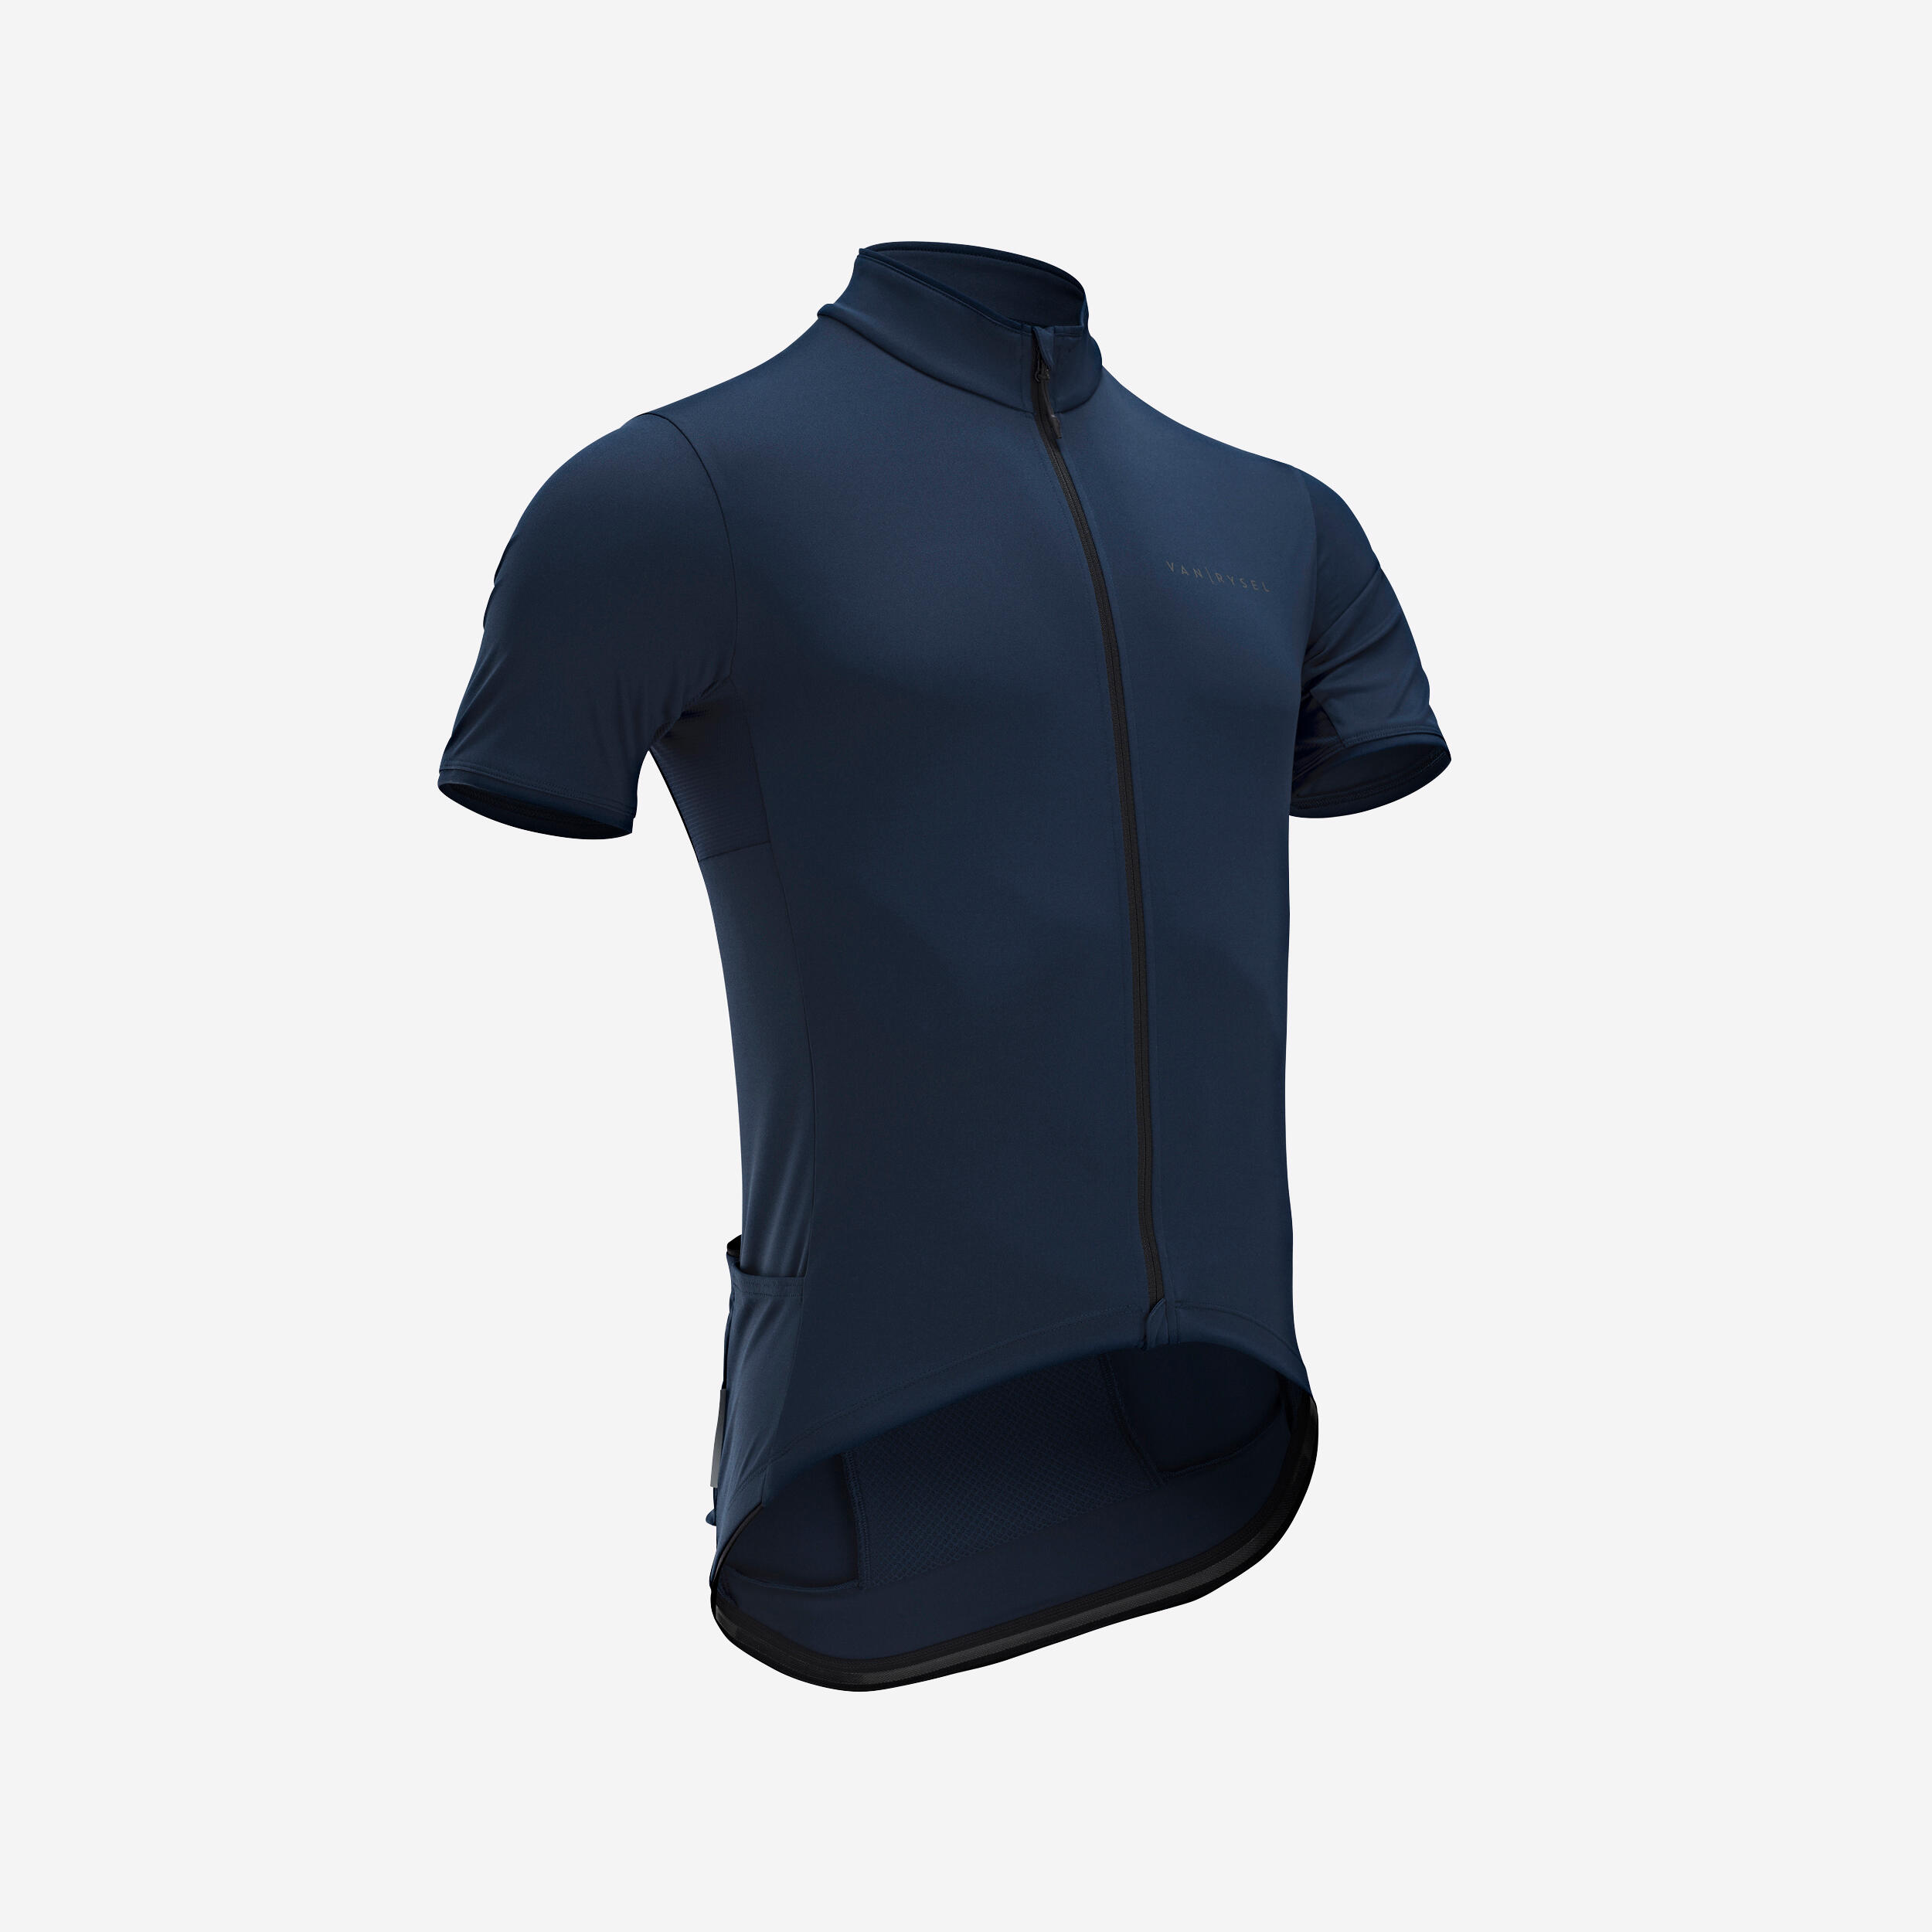 VAN RYSEL Men's Short-Sleeved Road Cycling Summer Jersey RC500 - Navy Blue